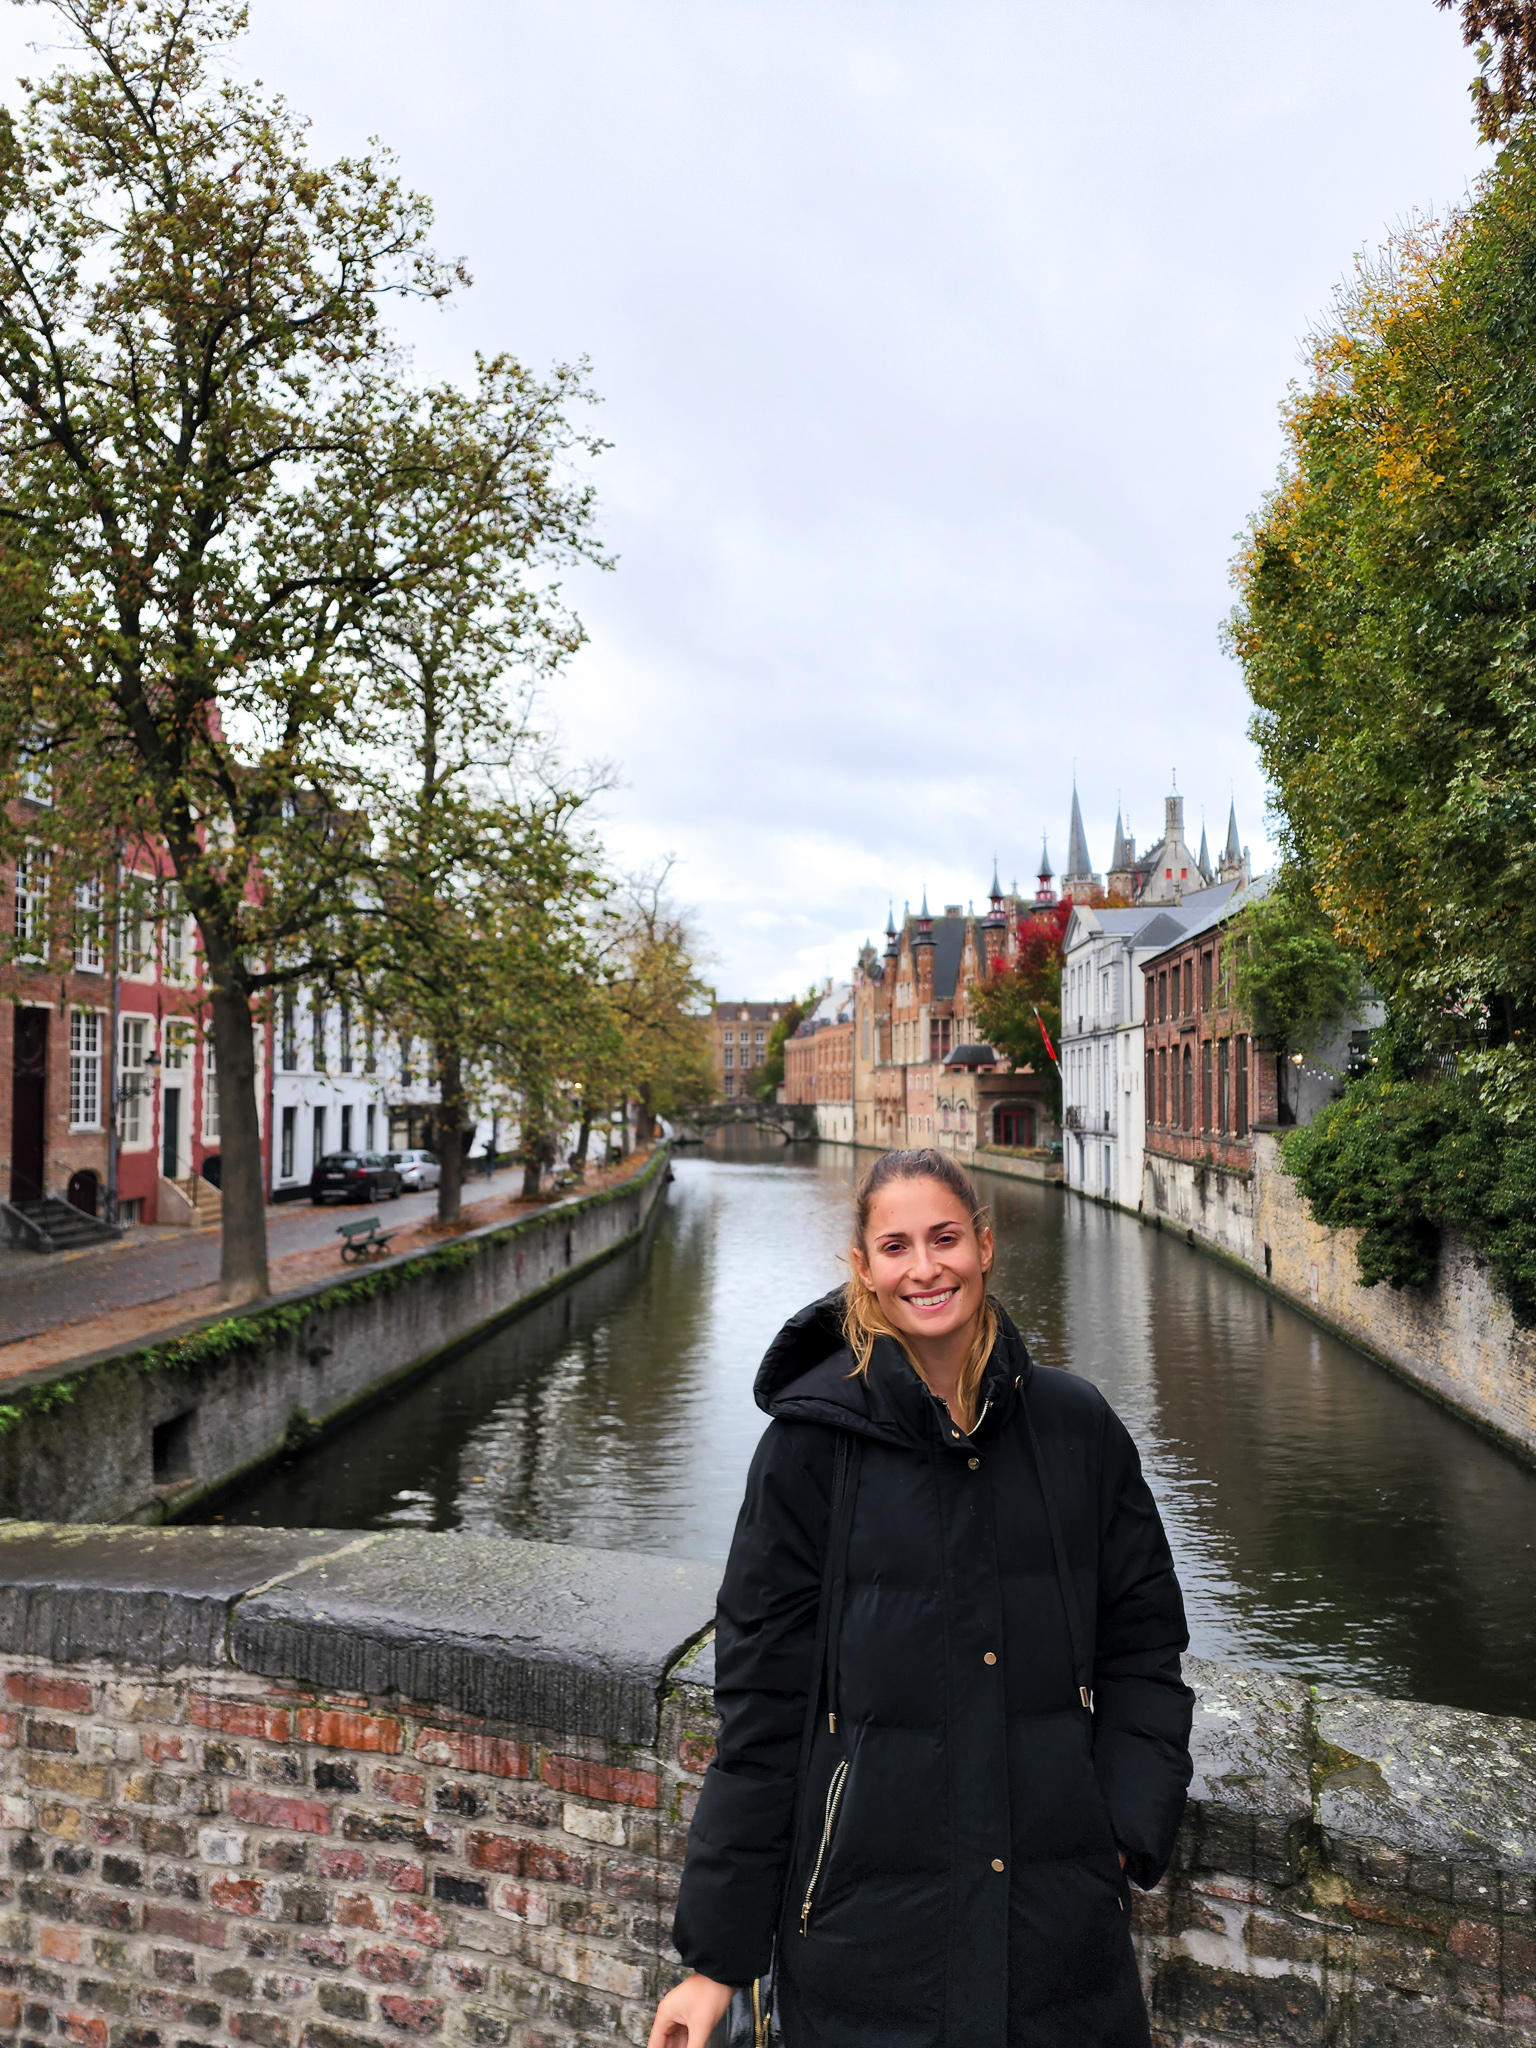 Bruges brugge belgium walk the canals